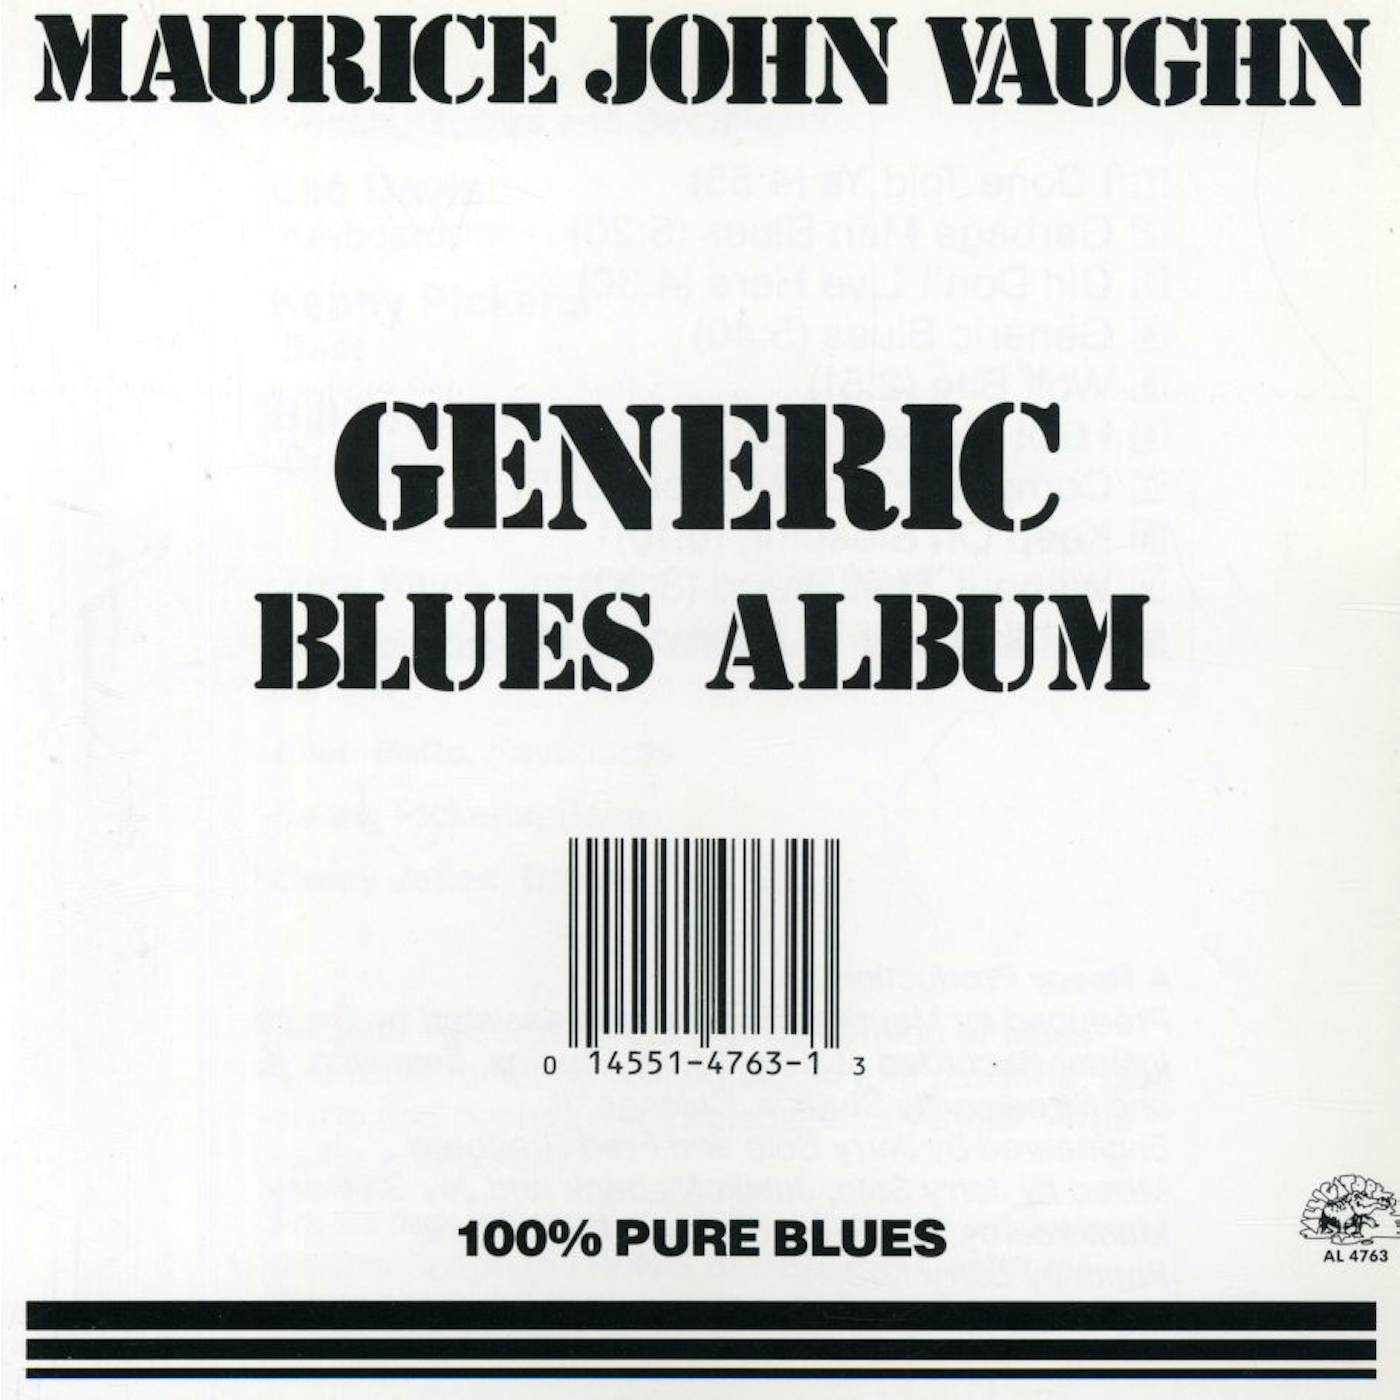 Maurice John Vaughn GENERIC BLUES ALBUM CD